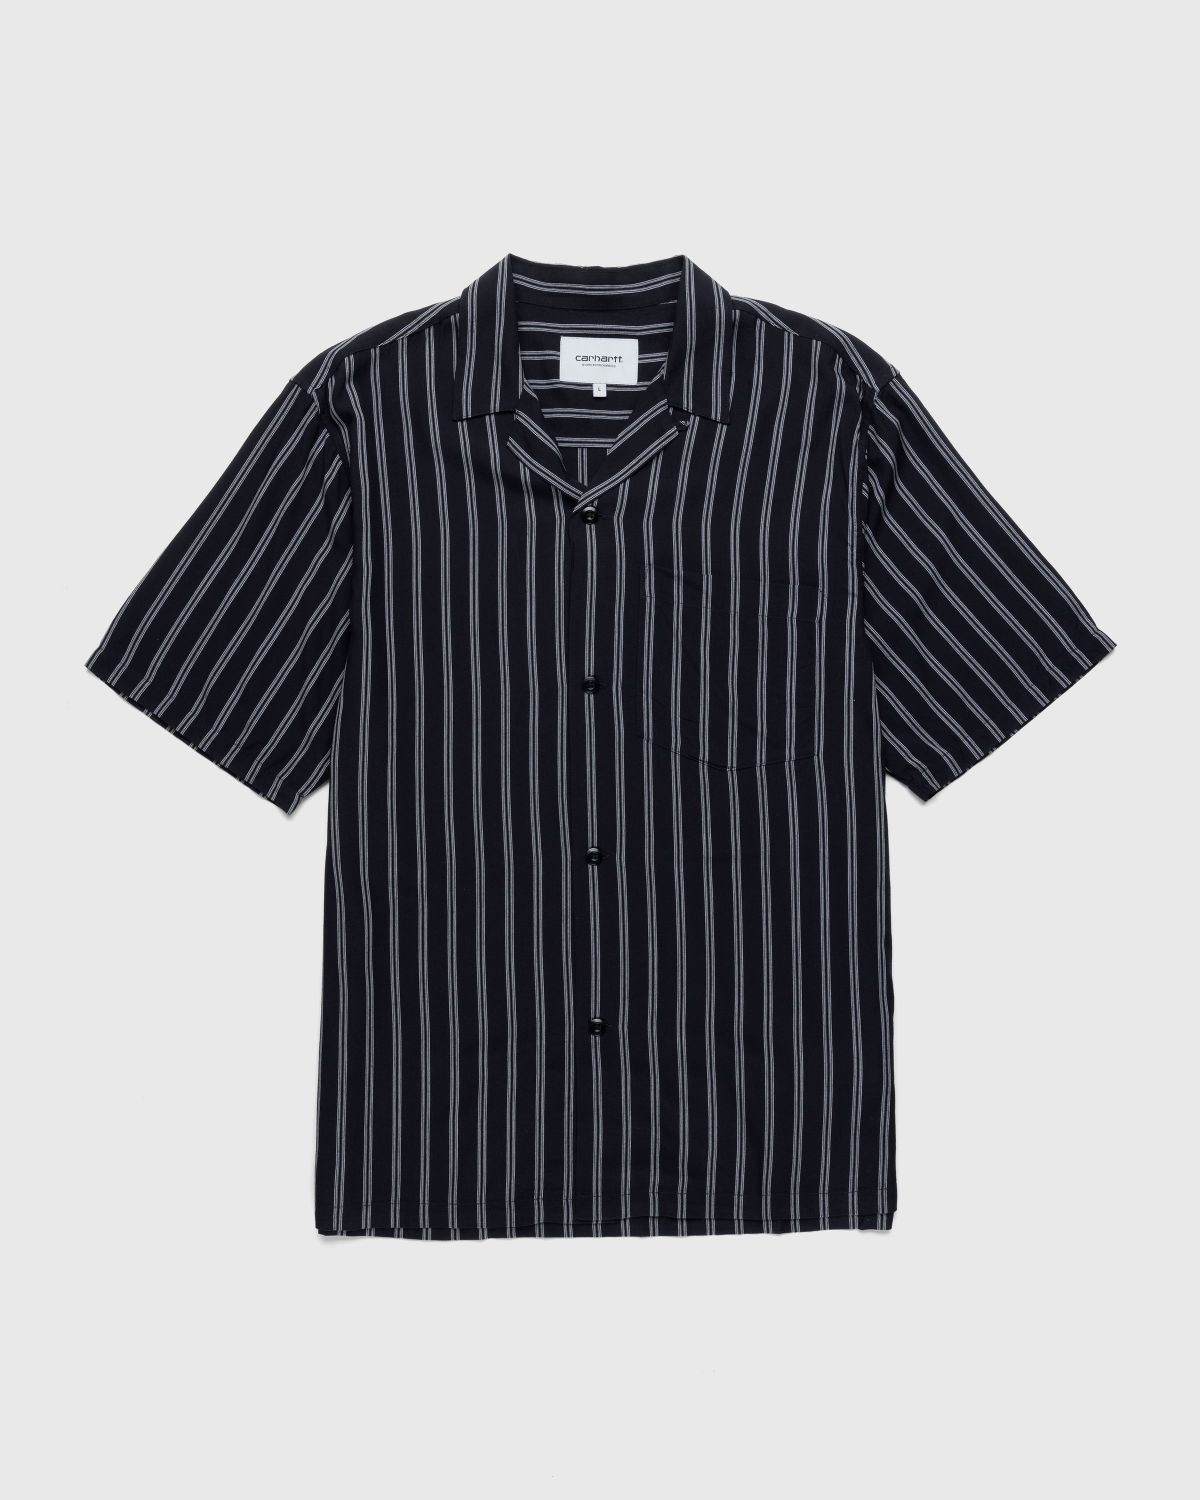 Carhartt WIP – Reyes Stripe Shirt Black - 1